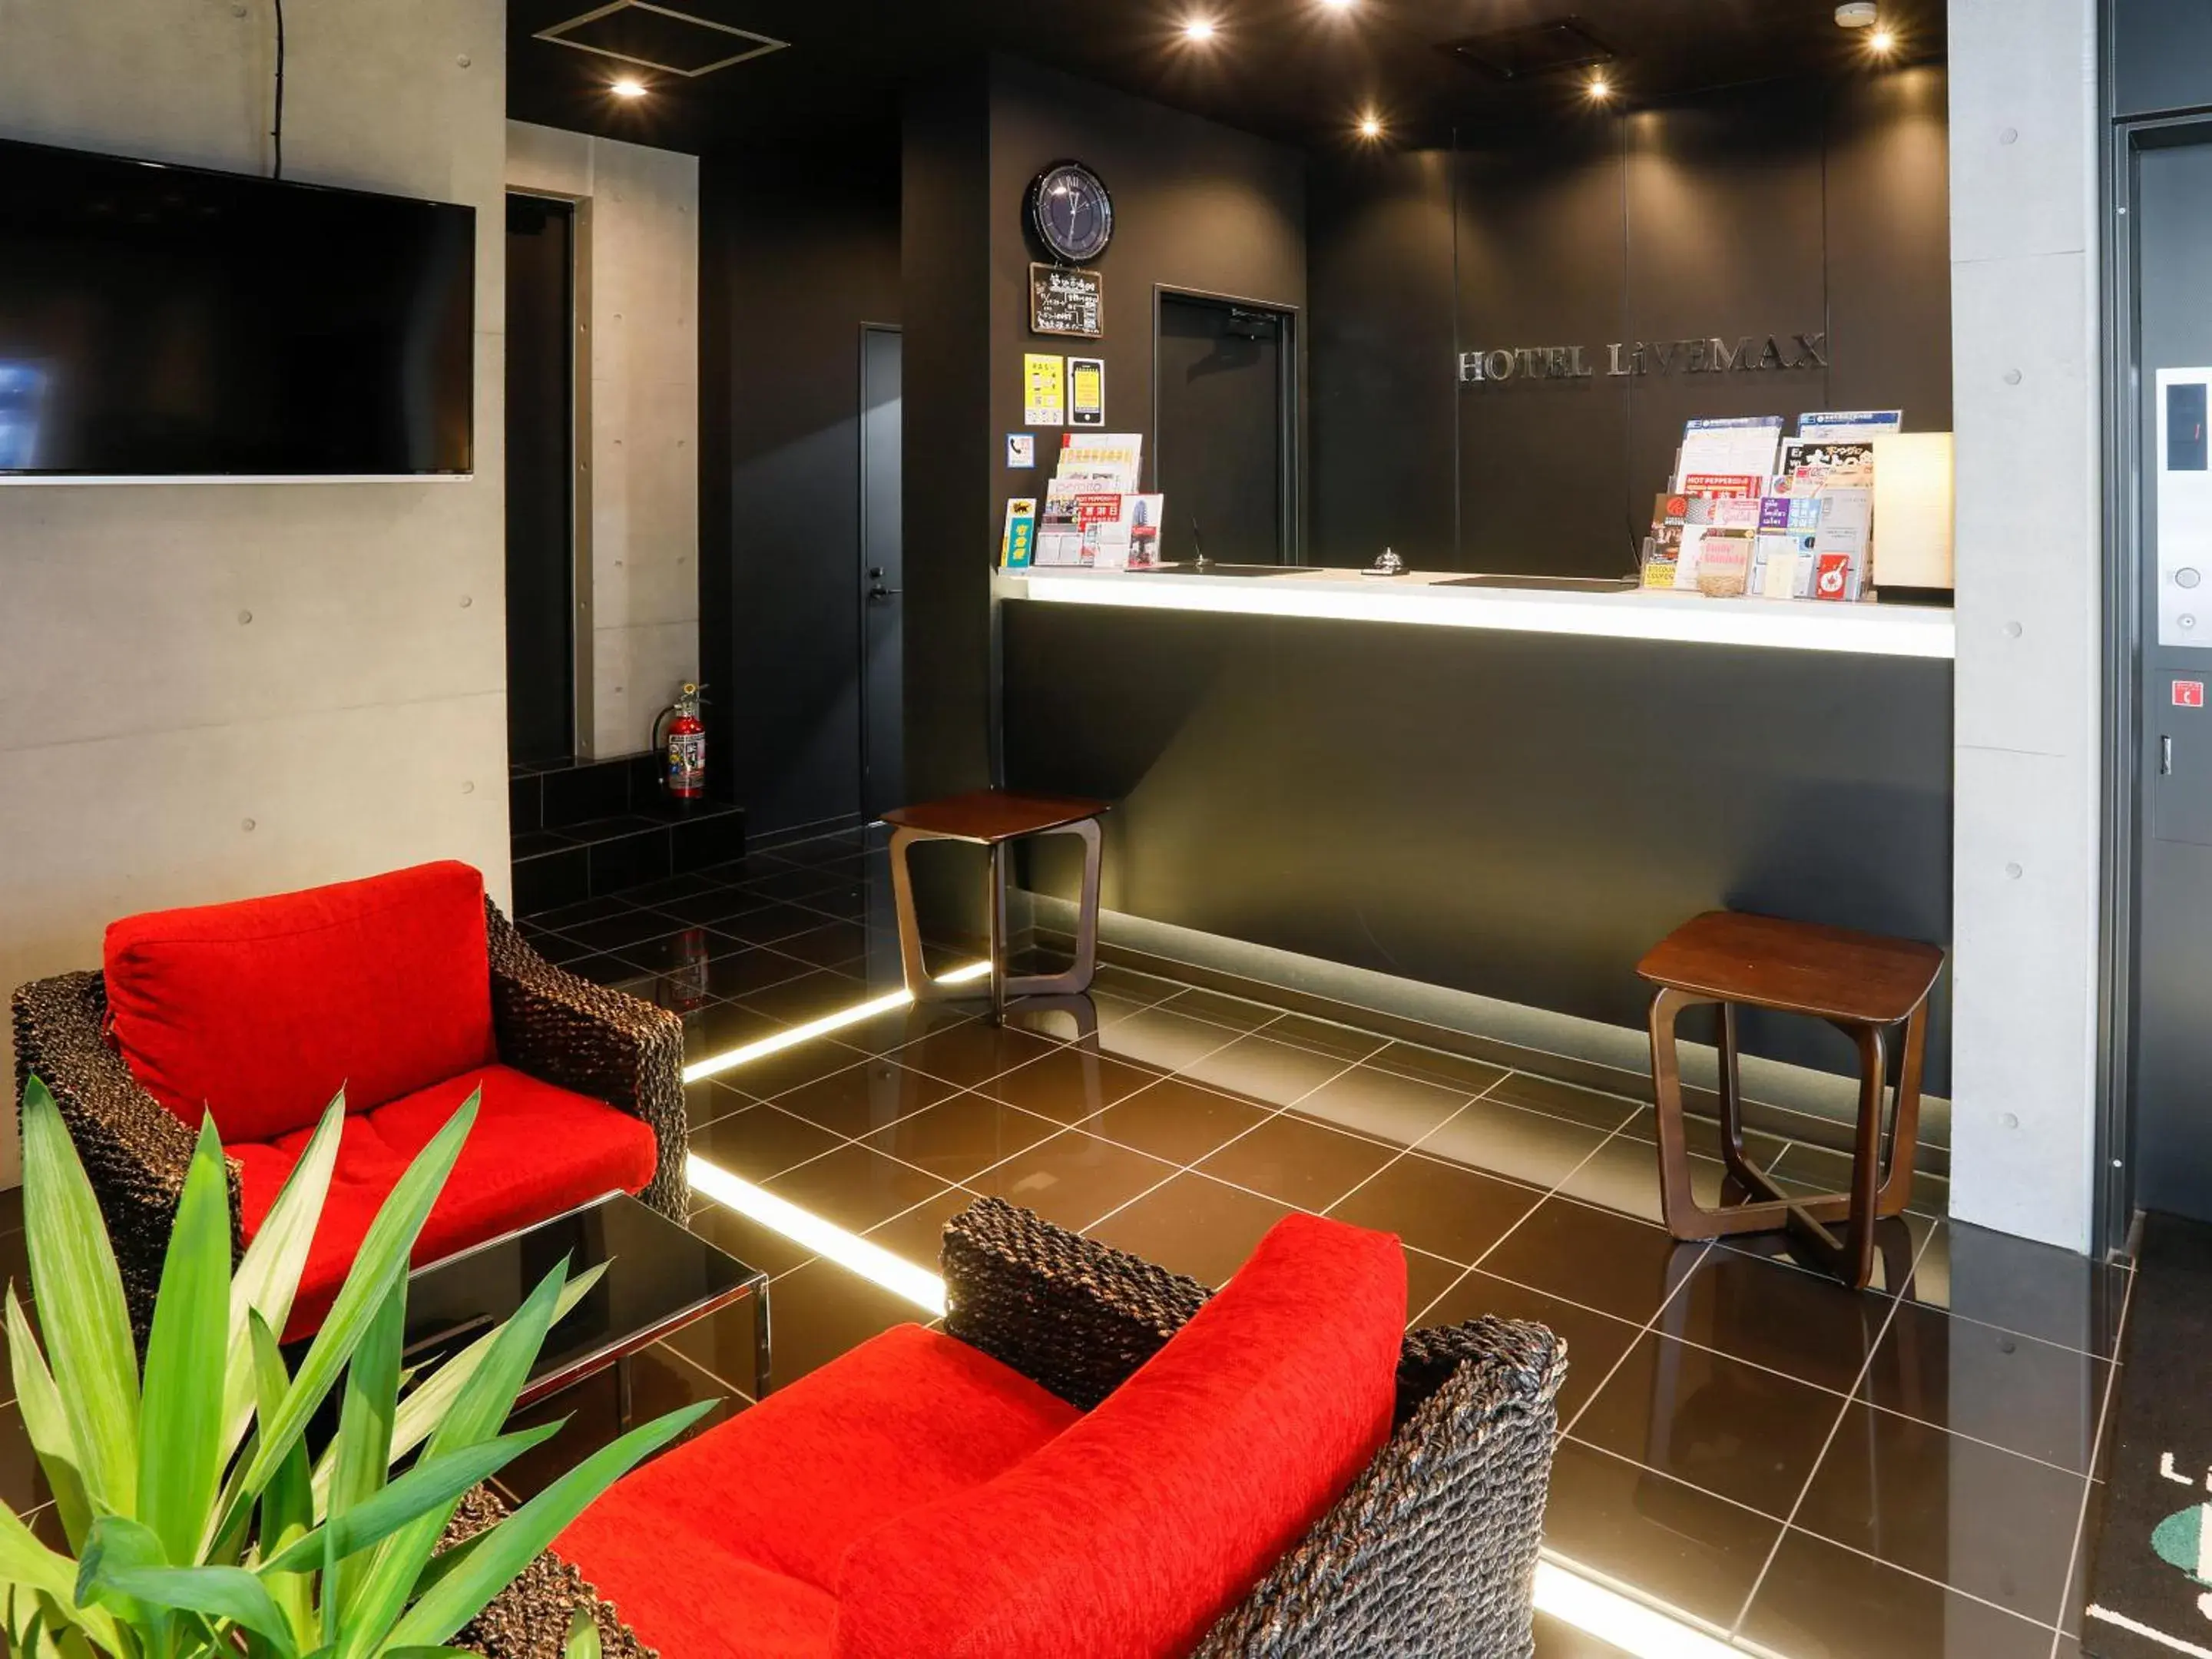 Lobby or reception in HOTEL LiVEMAX Higashi Ginza